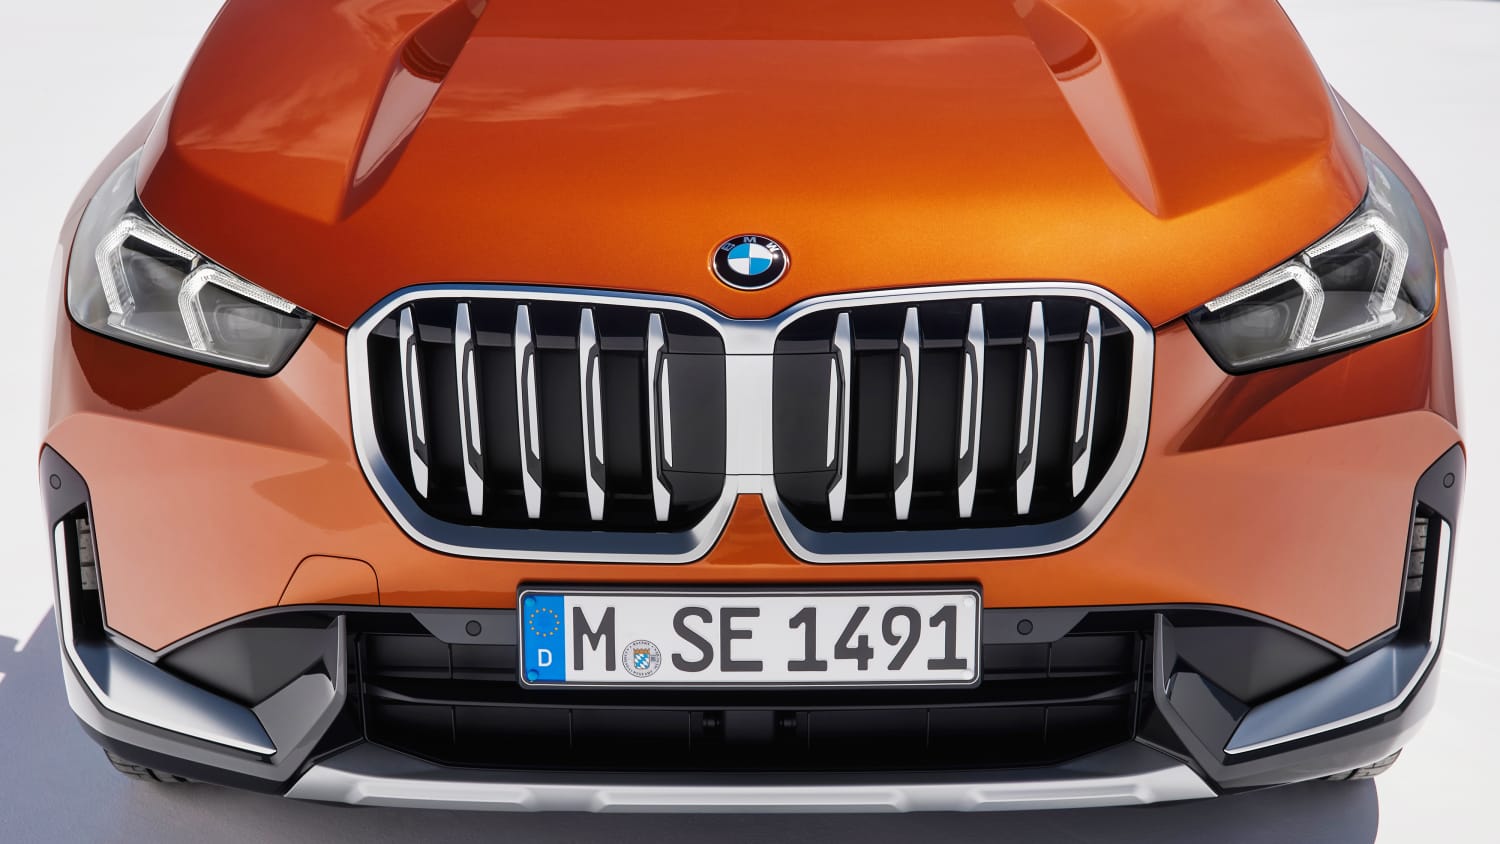 Bild-Vergleich: Neuer BMW X1 F48 vs. Vorgänger-X1 E84